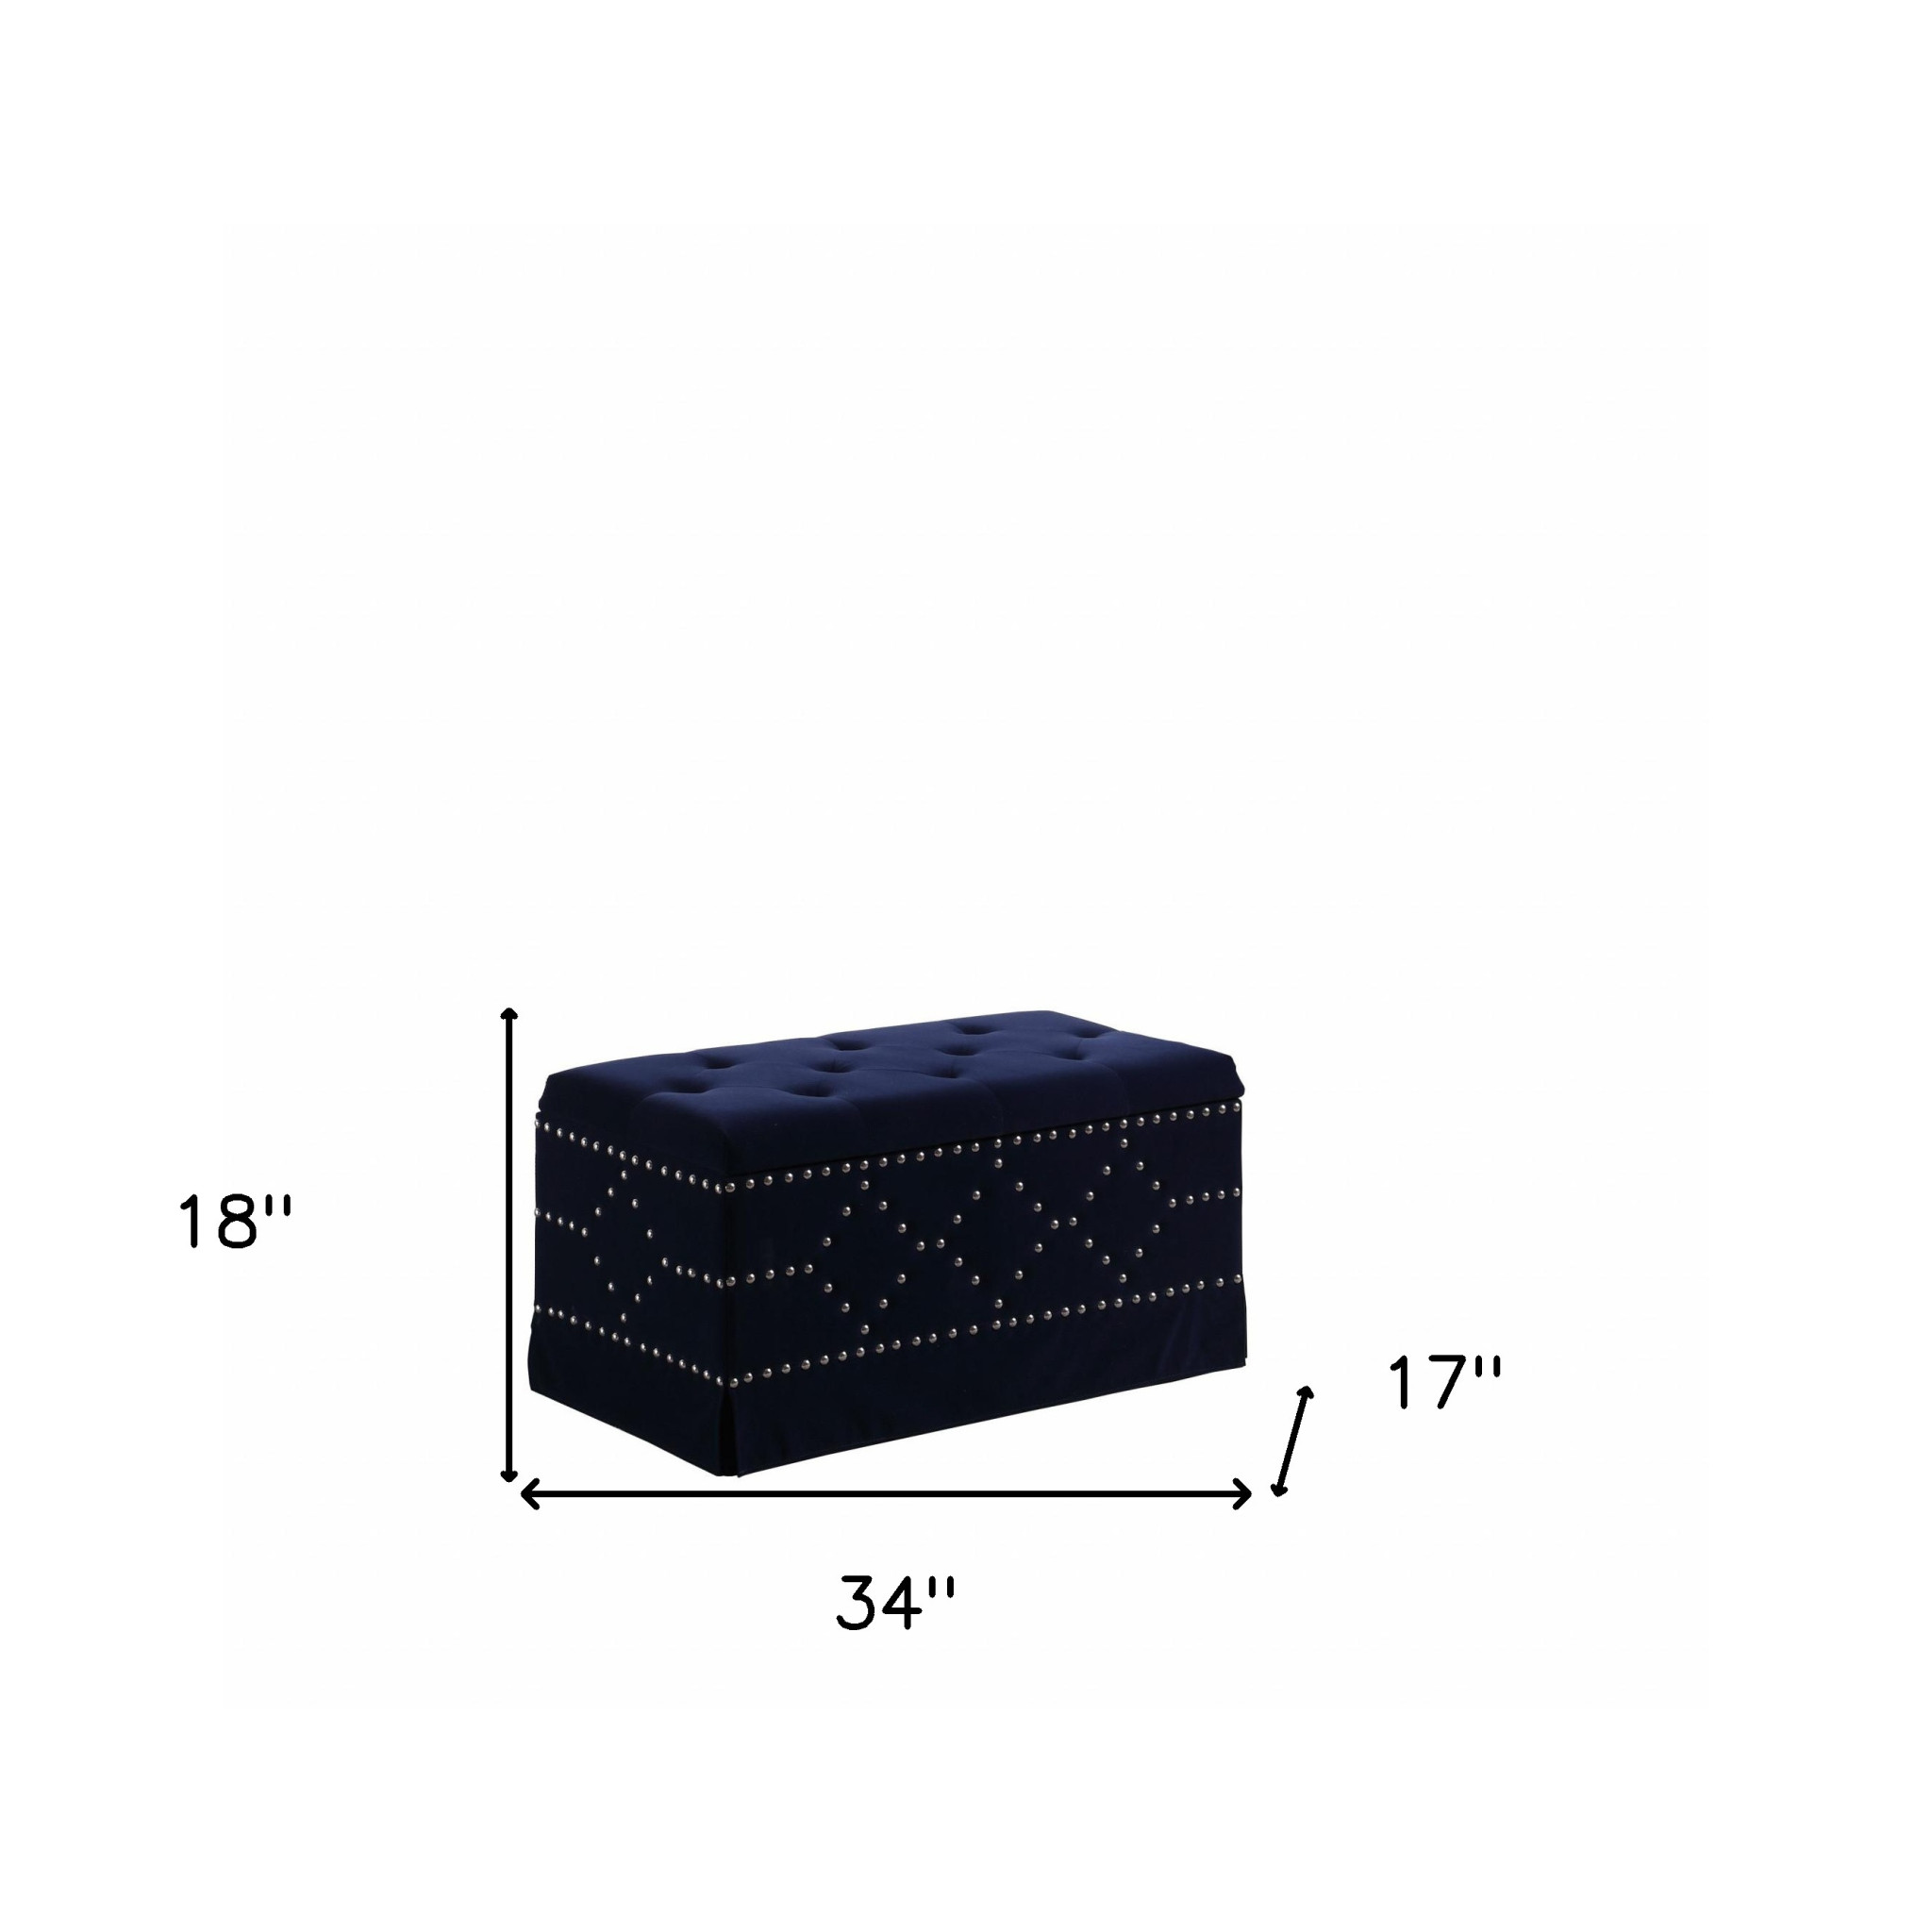 Deep Blue Velvet Nailhead Storage Bench with Ottomans